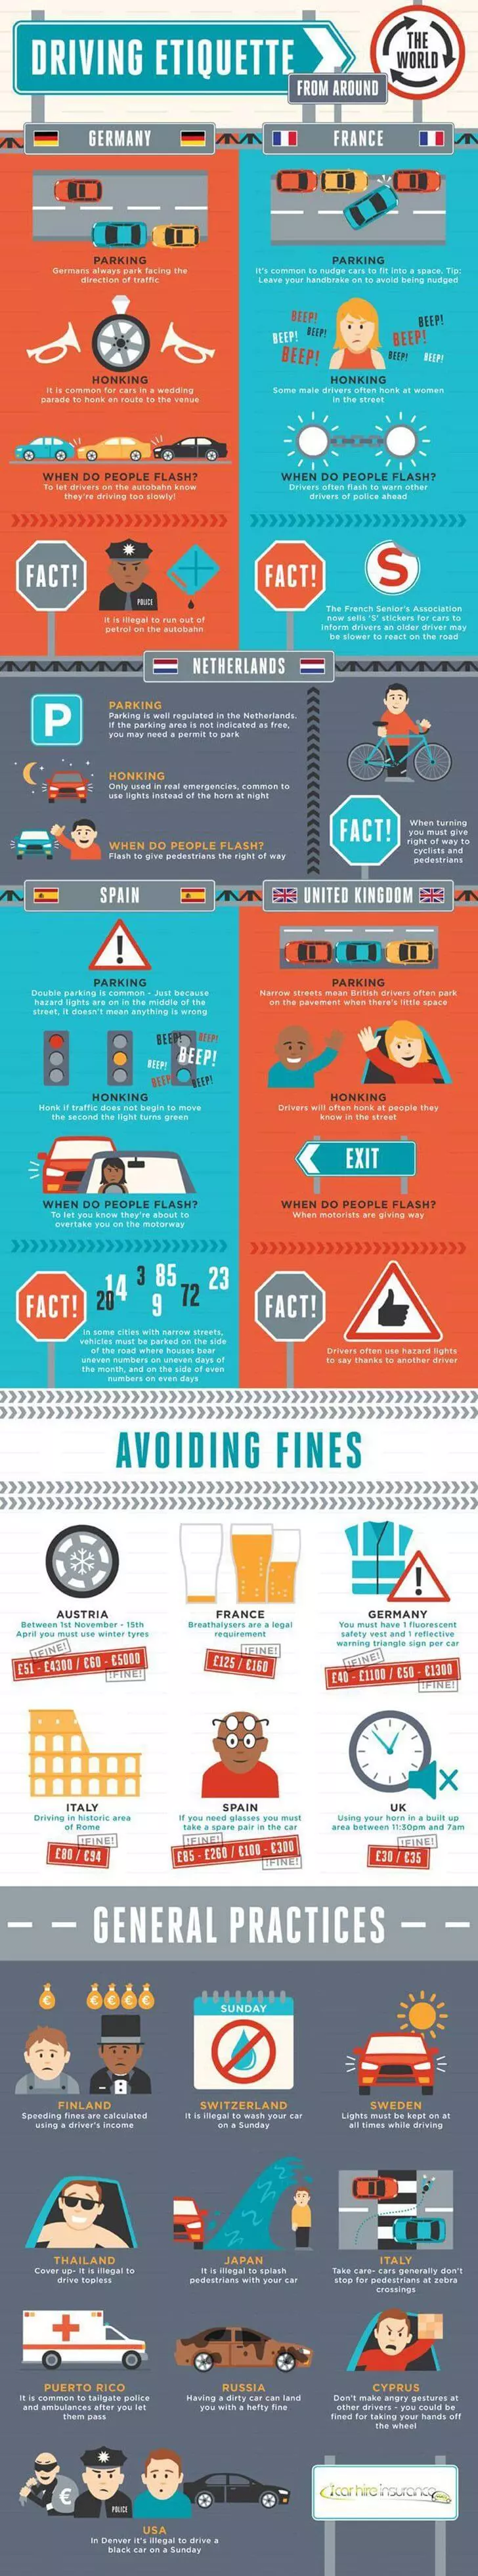 Driving etiquette europe infographic